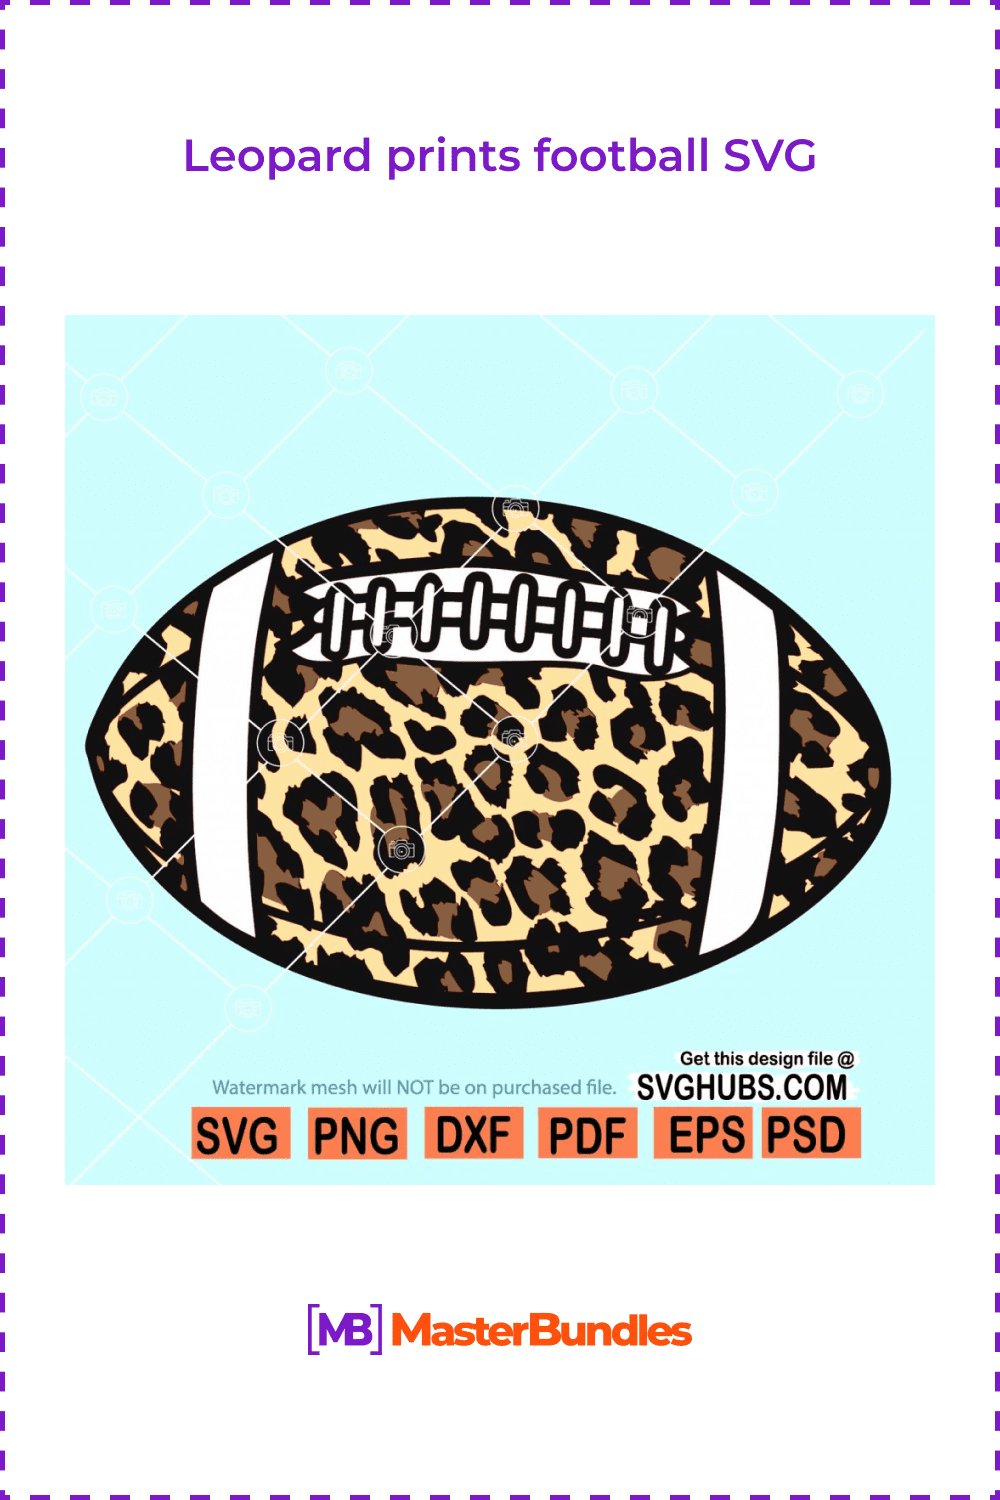 Leopard prints football SVG.